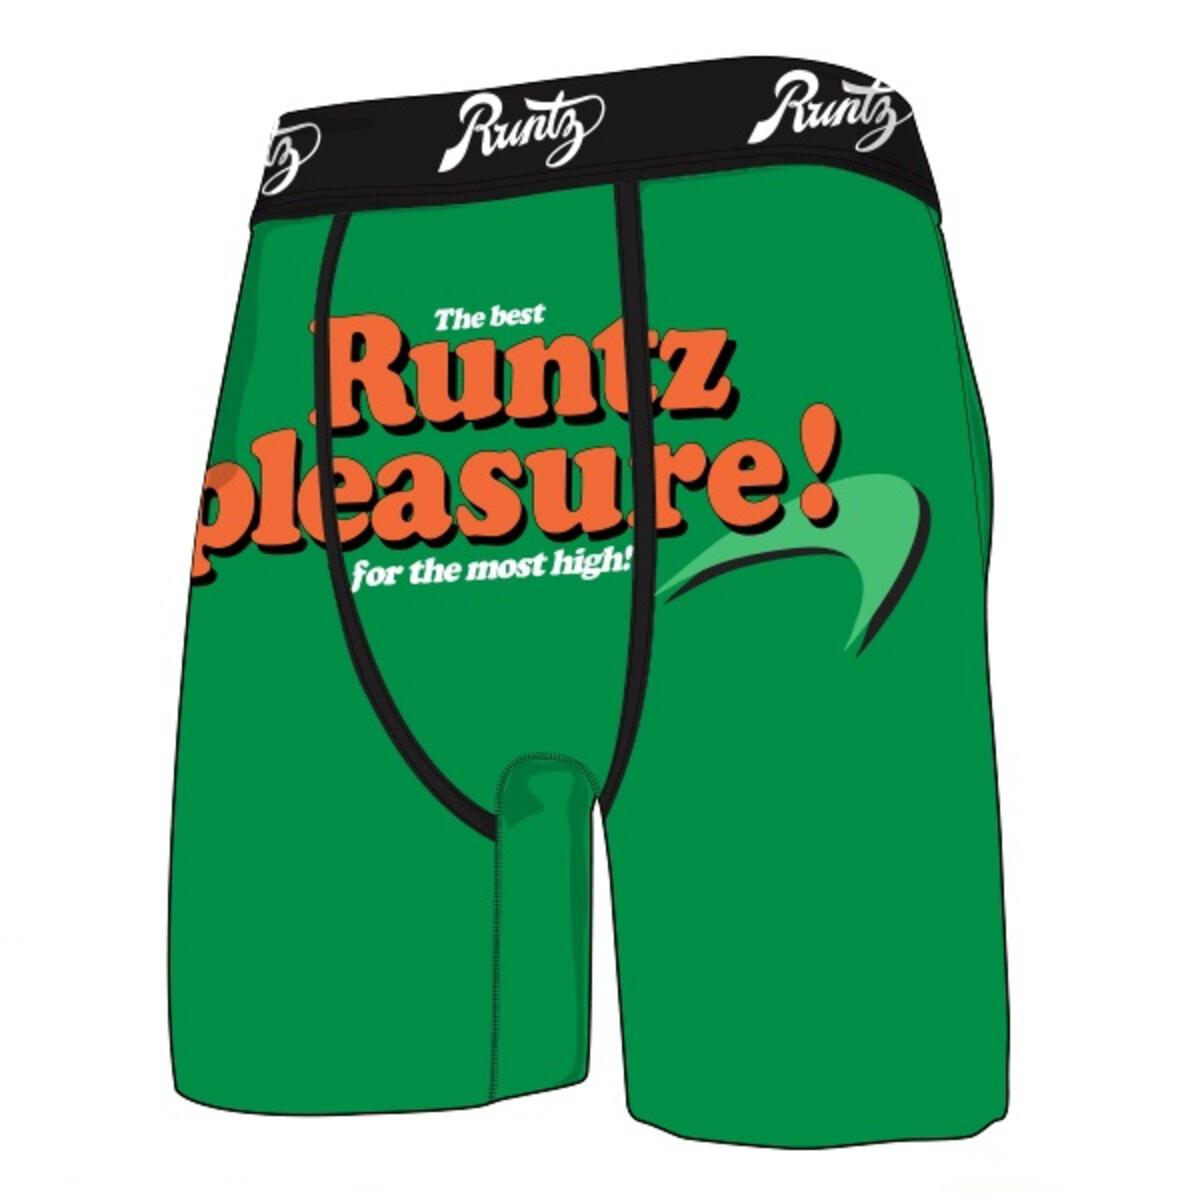 Runtz-Pleasure Underwear